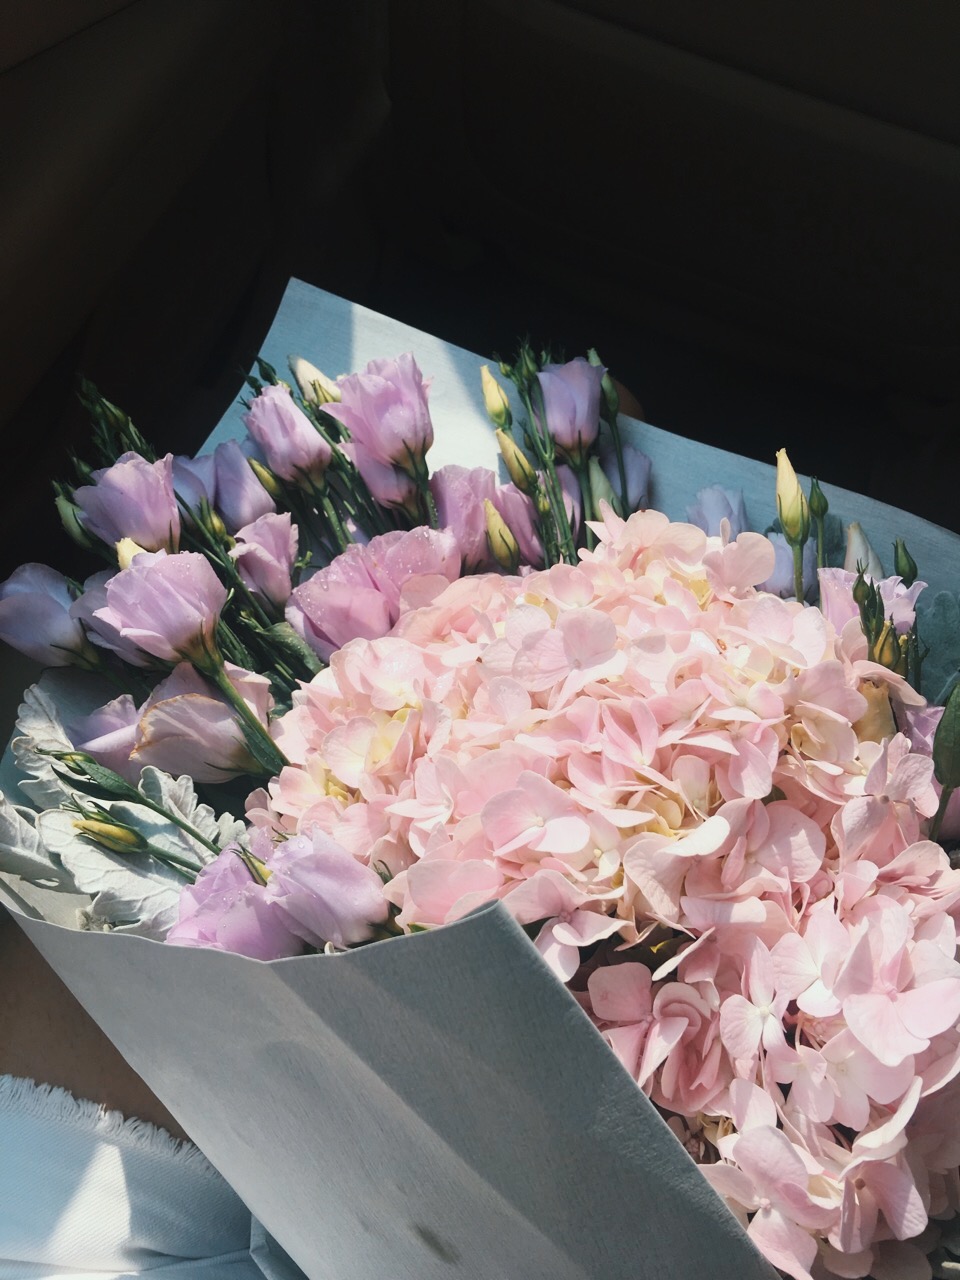 “I received flowers from my boyfriend.”